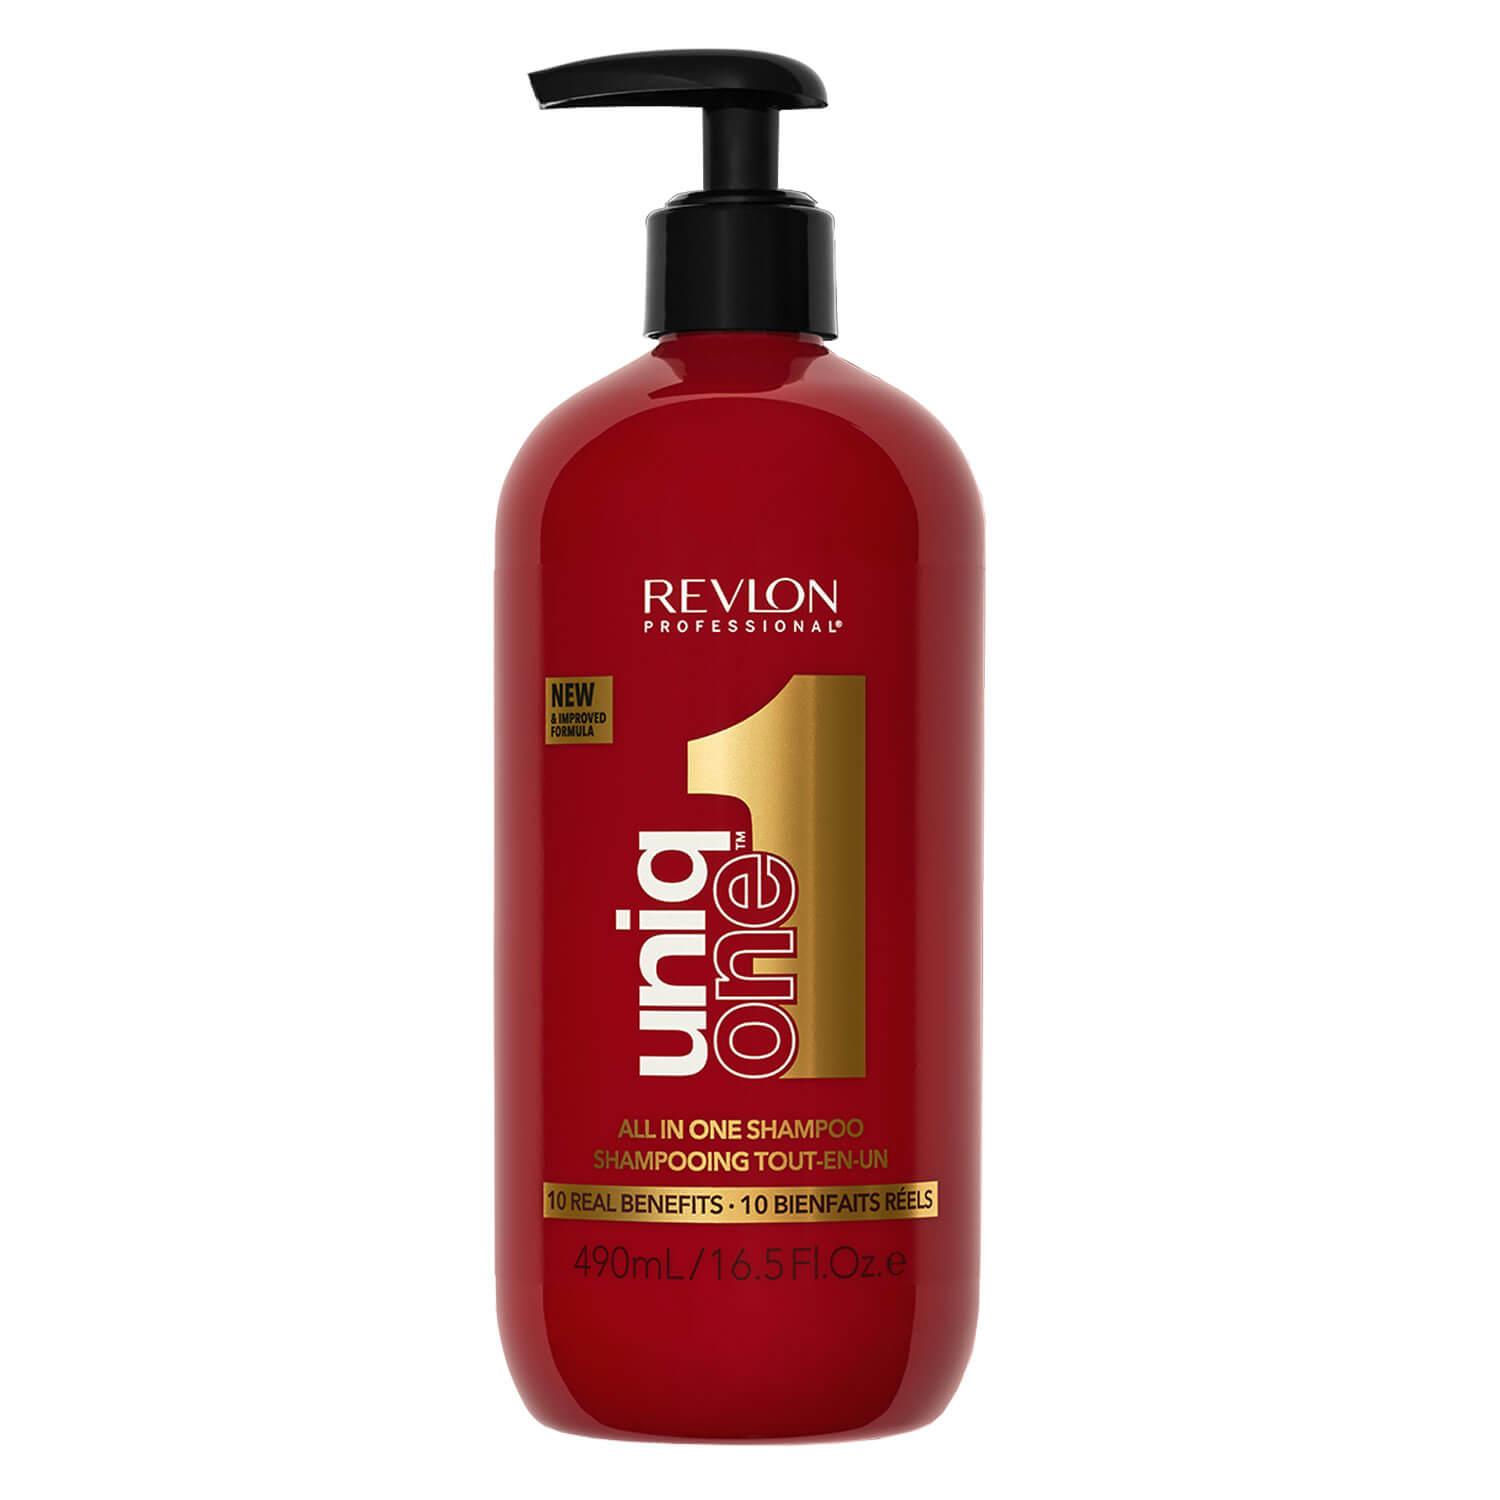 uniq one - All in One Shampoo